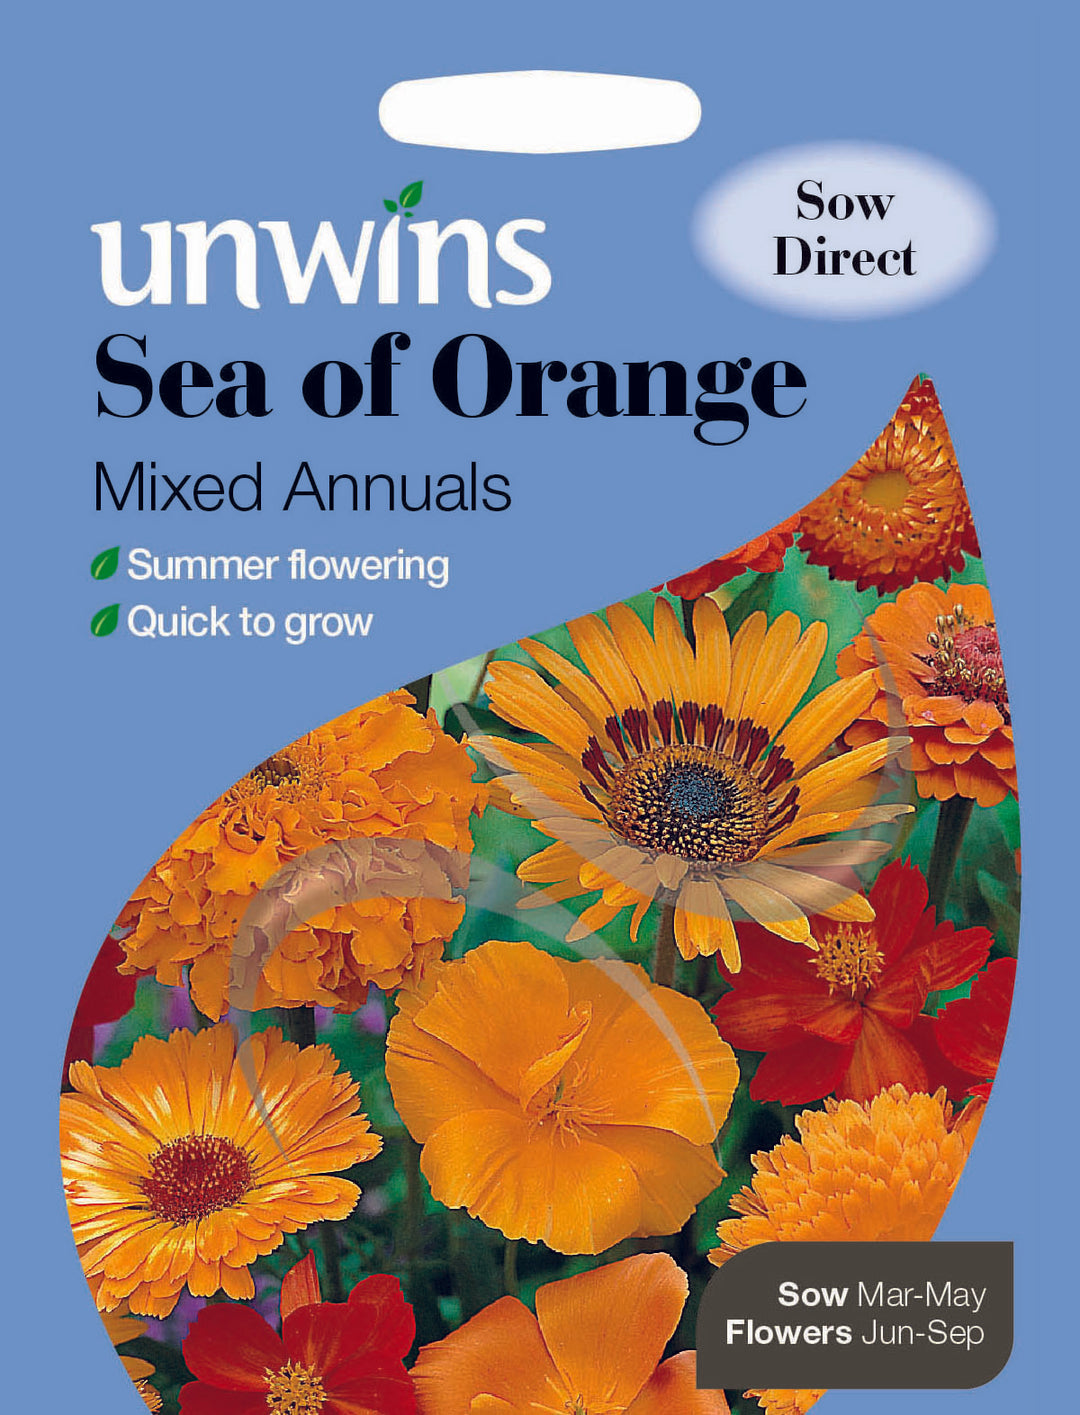 Unwins Sea of Orange Mixed Annuals